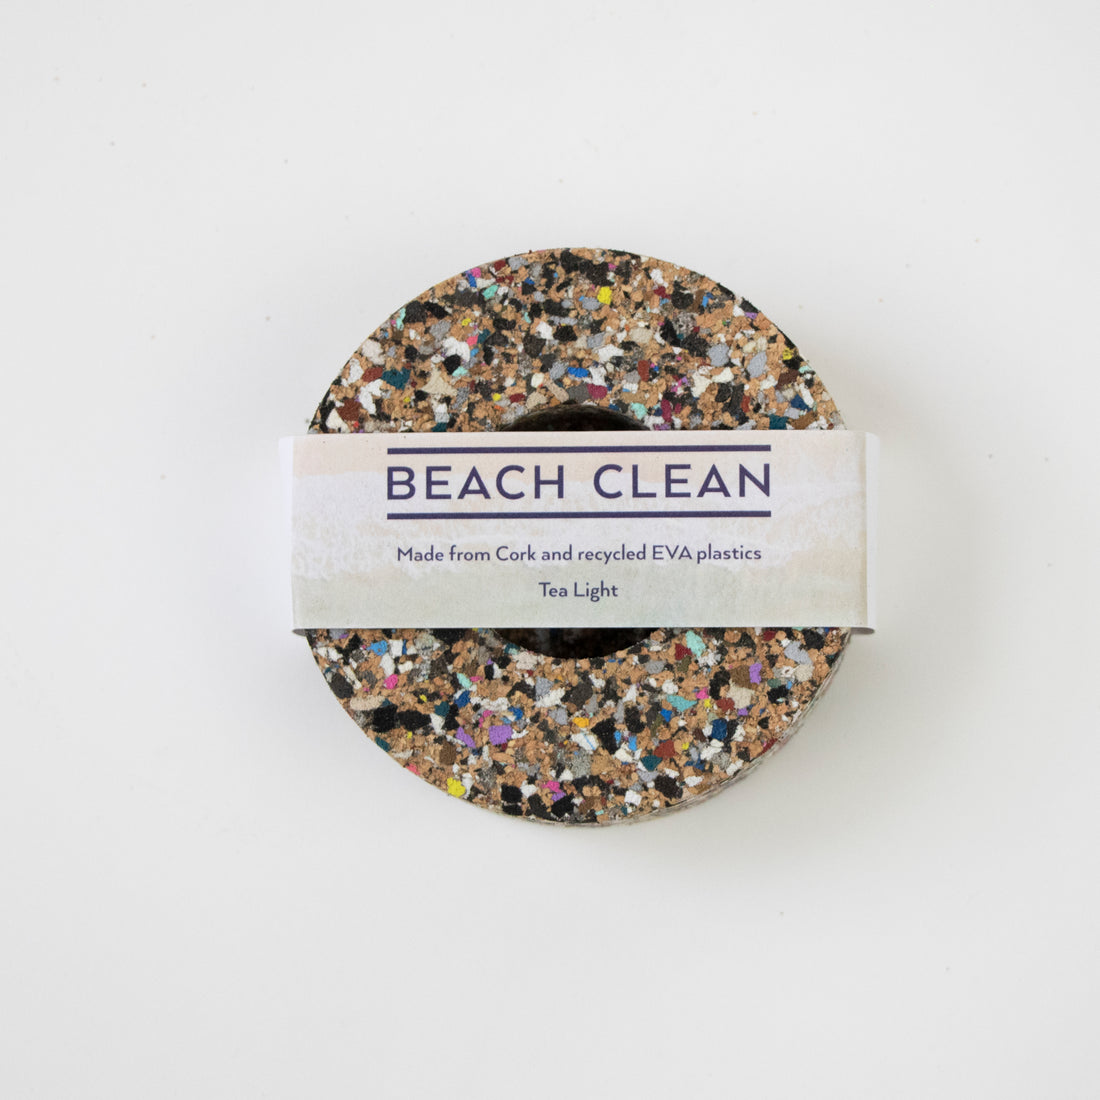 Beach Clean eco friendly tea light holder